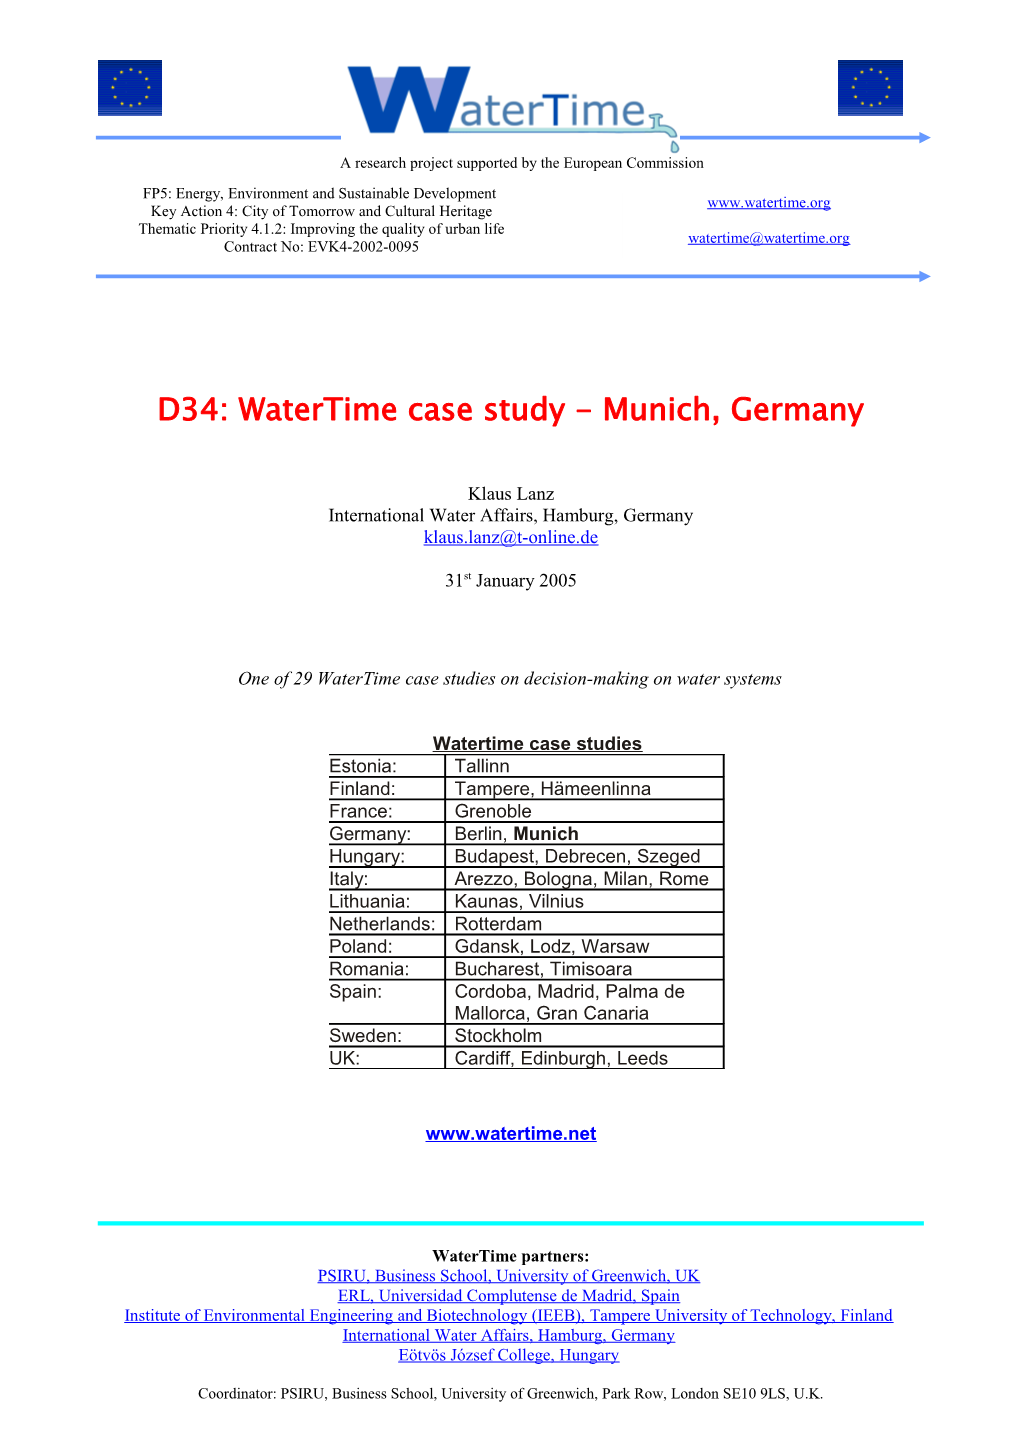 D34: Watertime Case Study - Munich, Germany